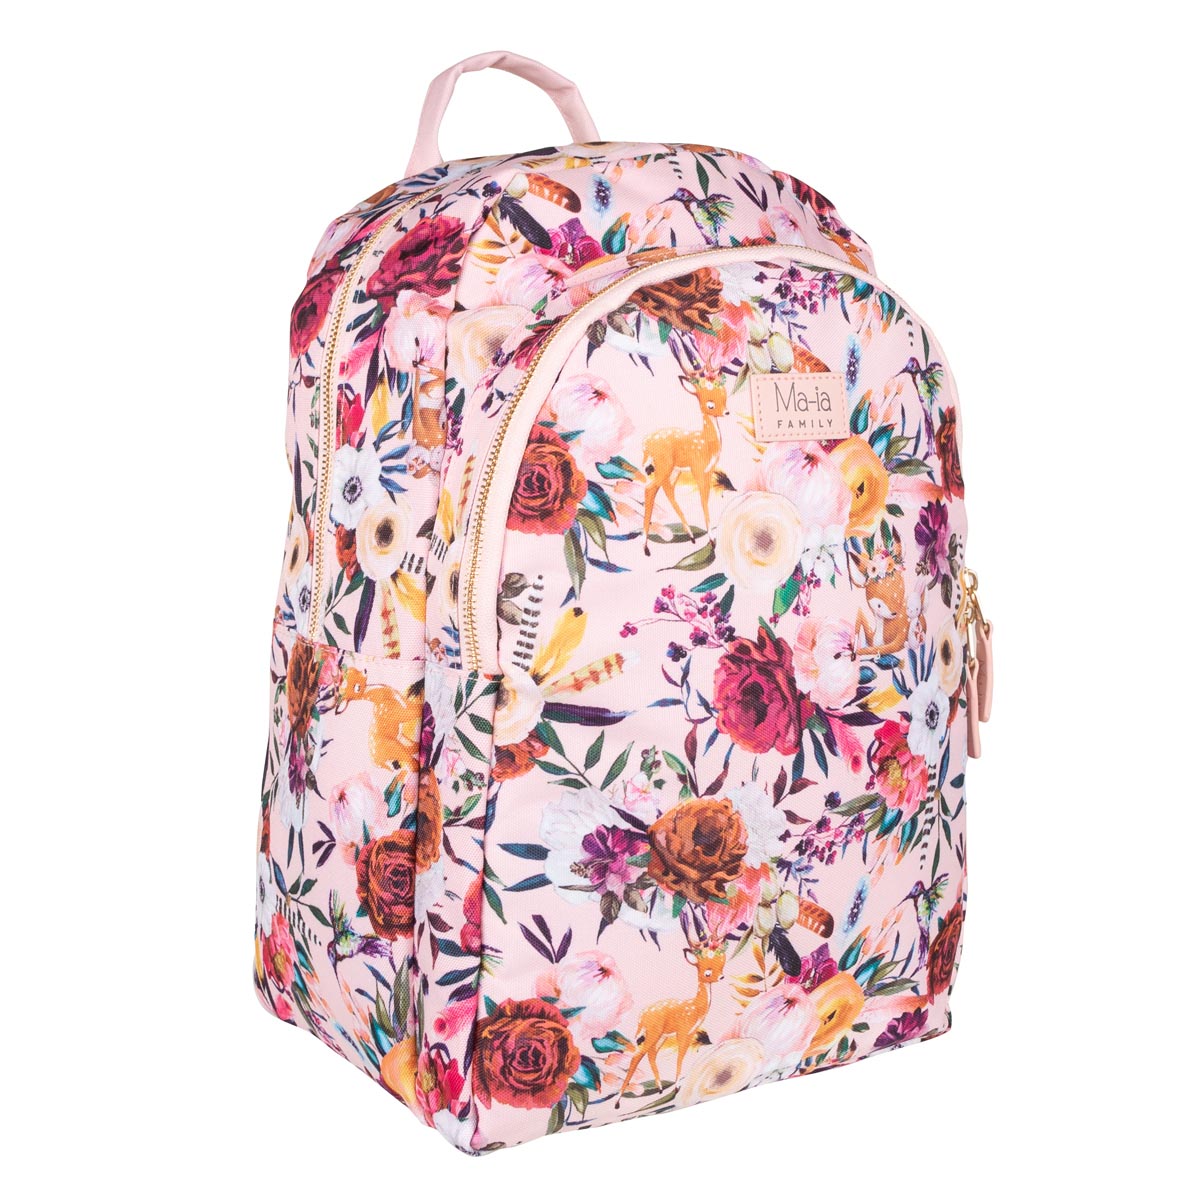 Bambi Backpack, large, pink